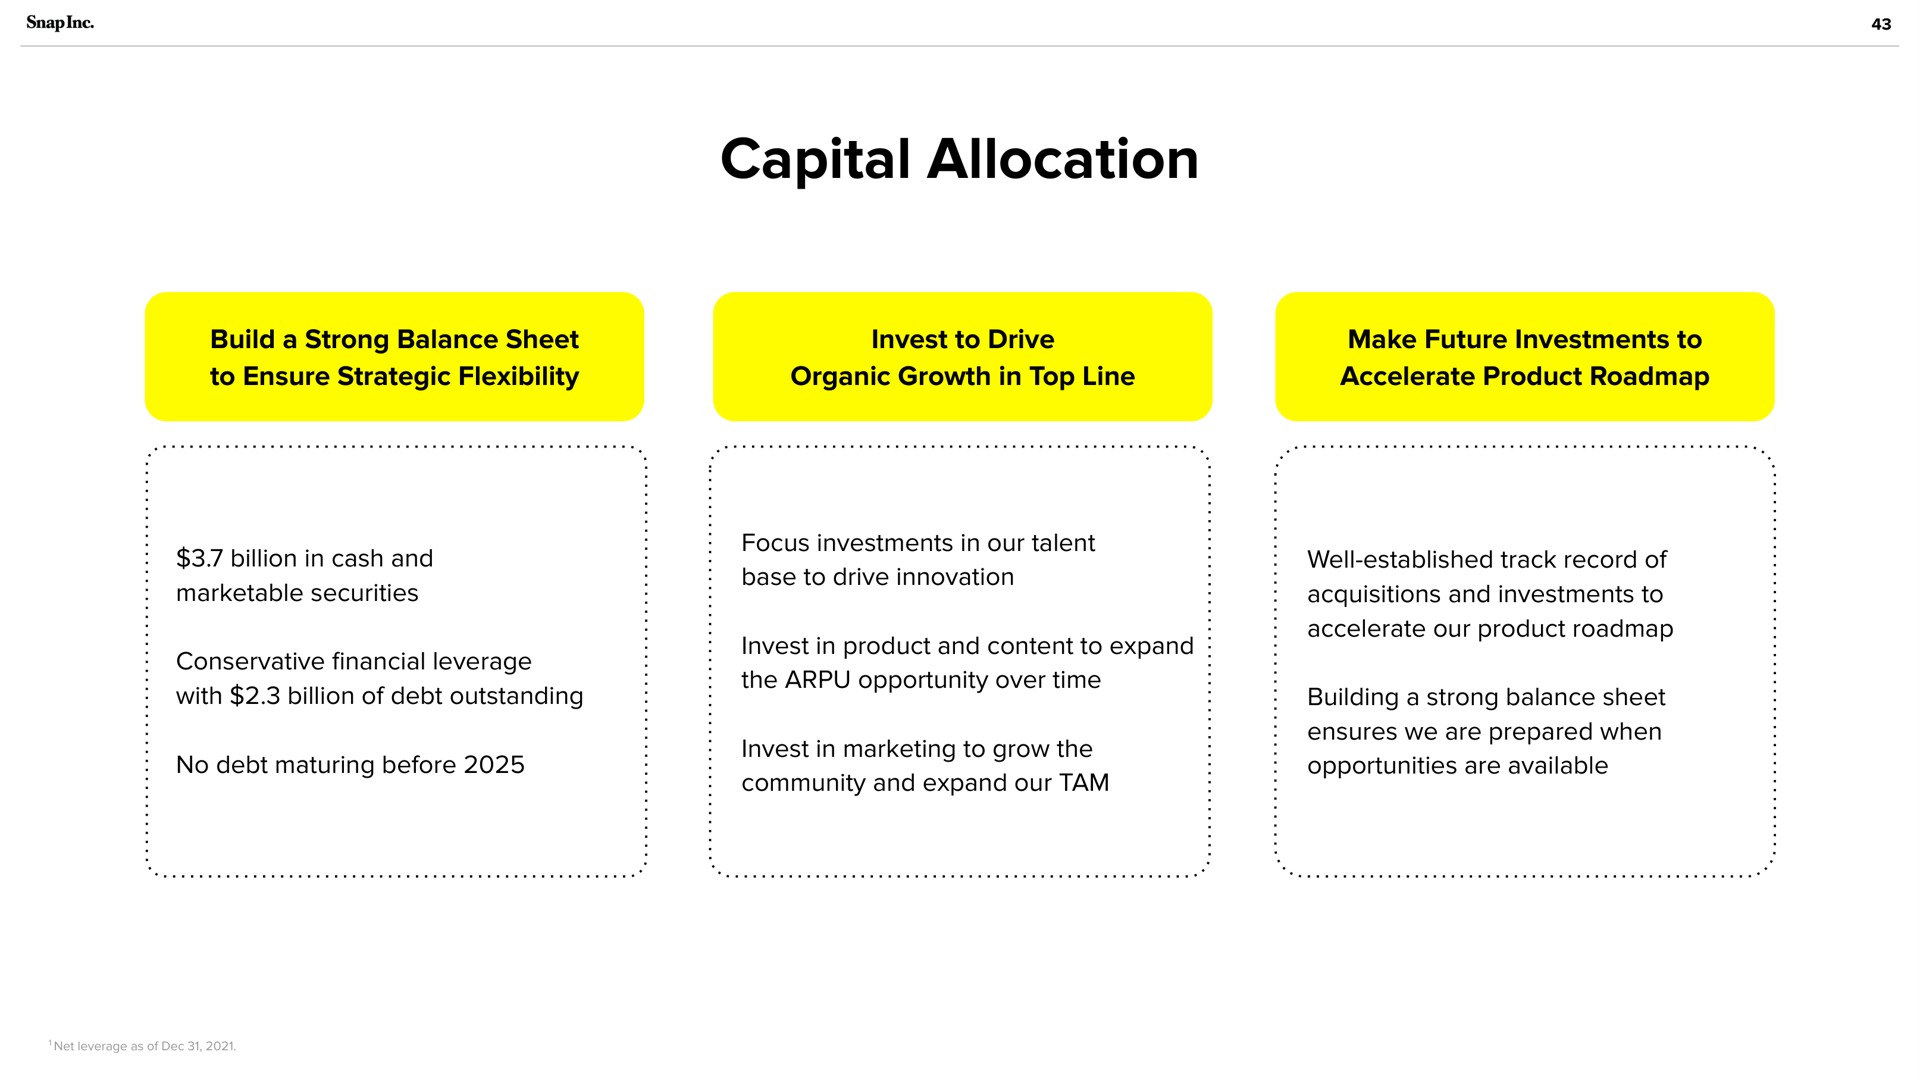 capital allocation | Snap Inc